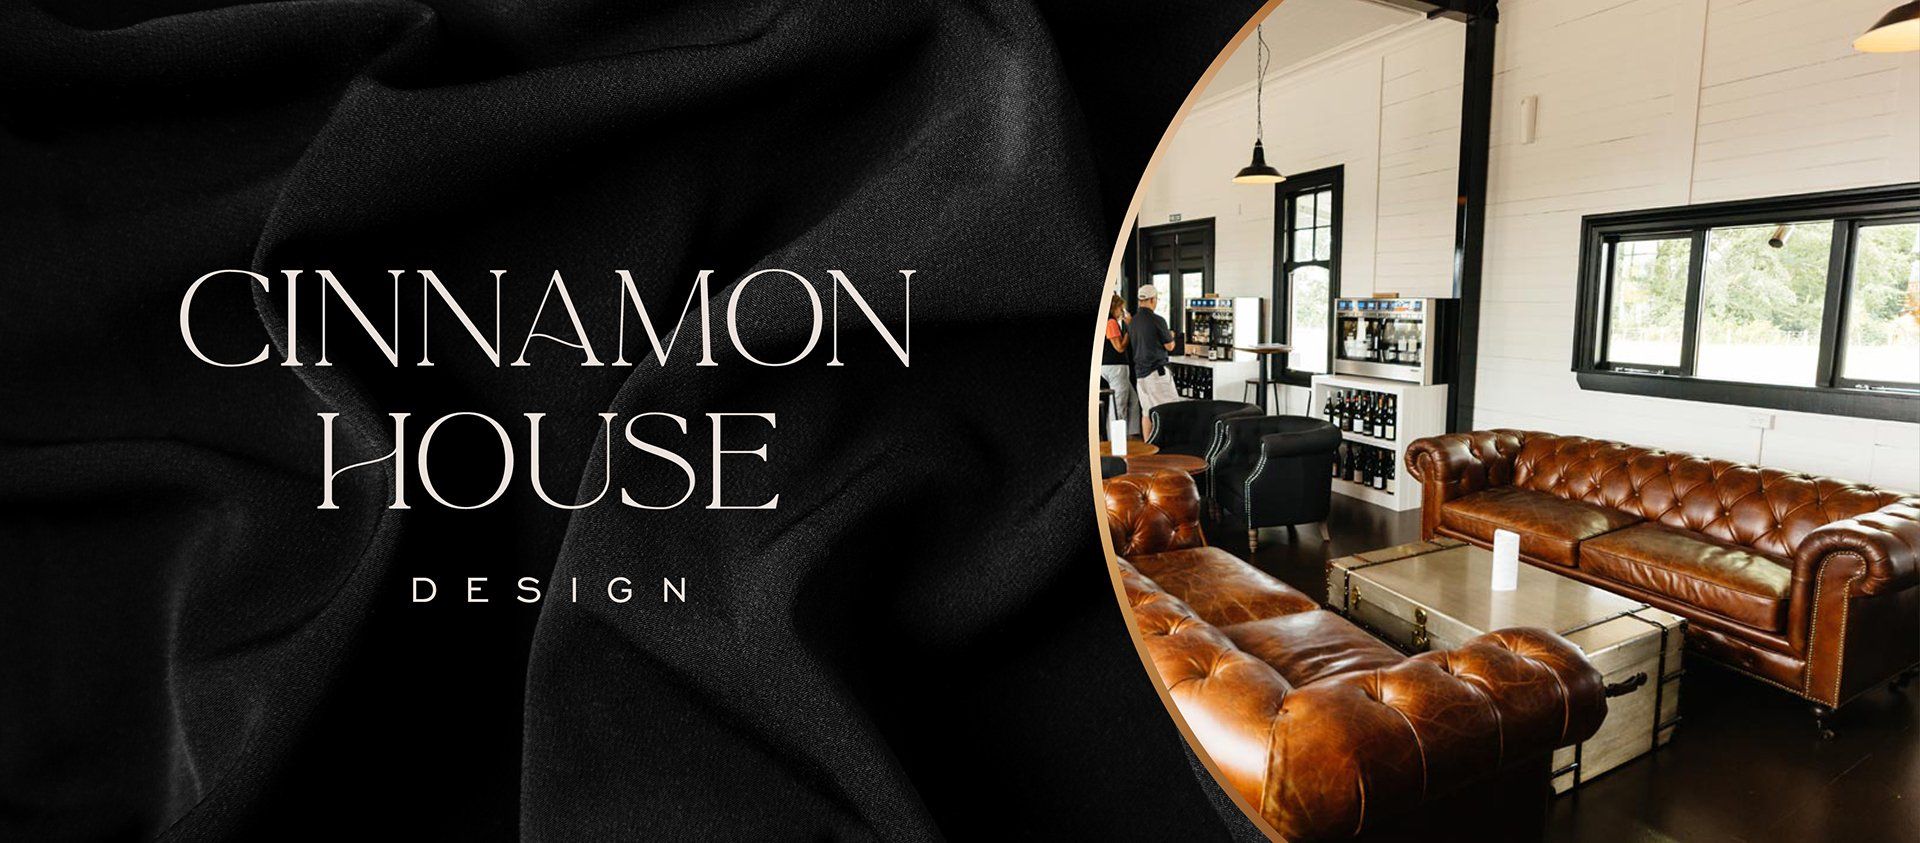 Cinnamon House Design branding by Vanilla Hayes Ltd in Blenheim, New Zealand